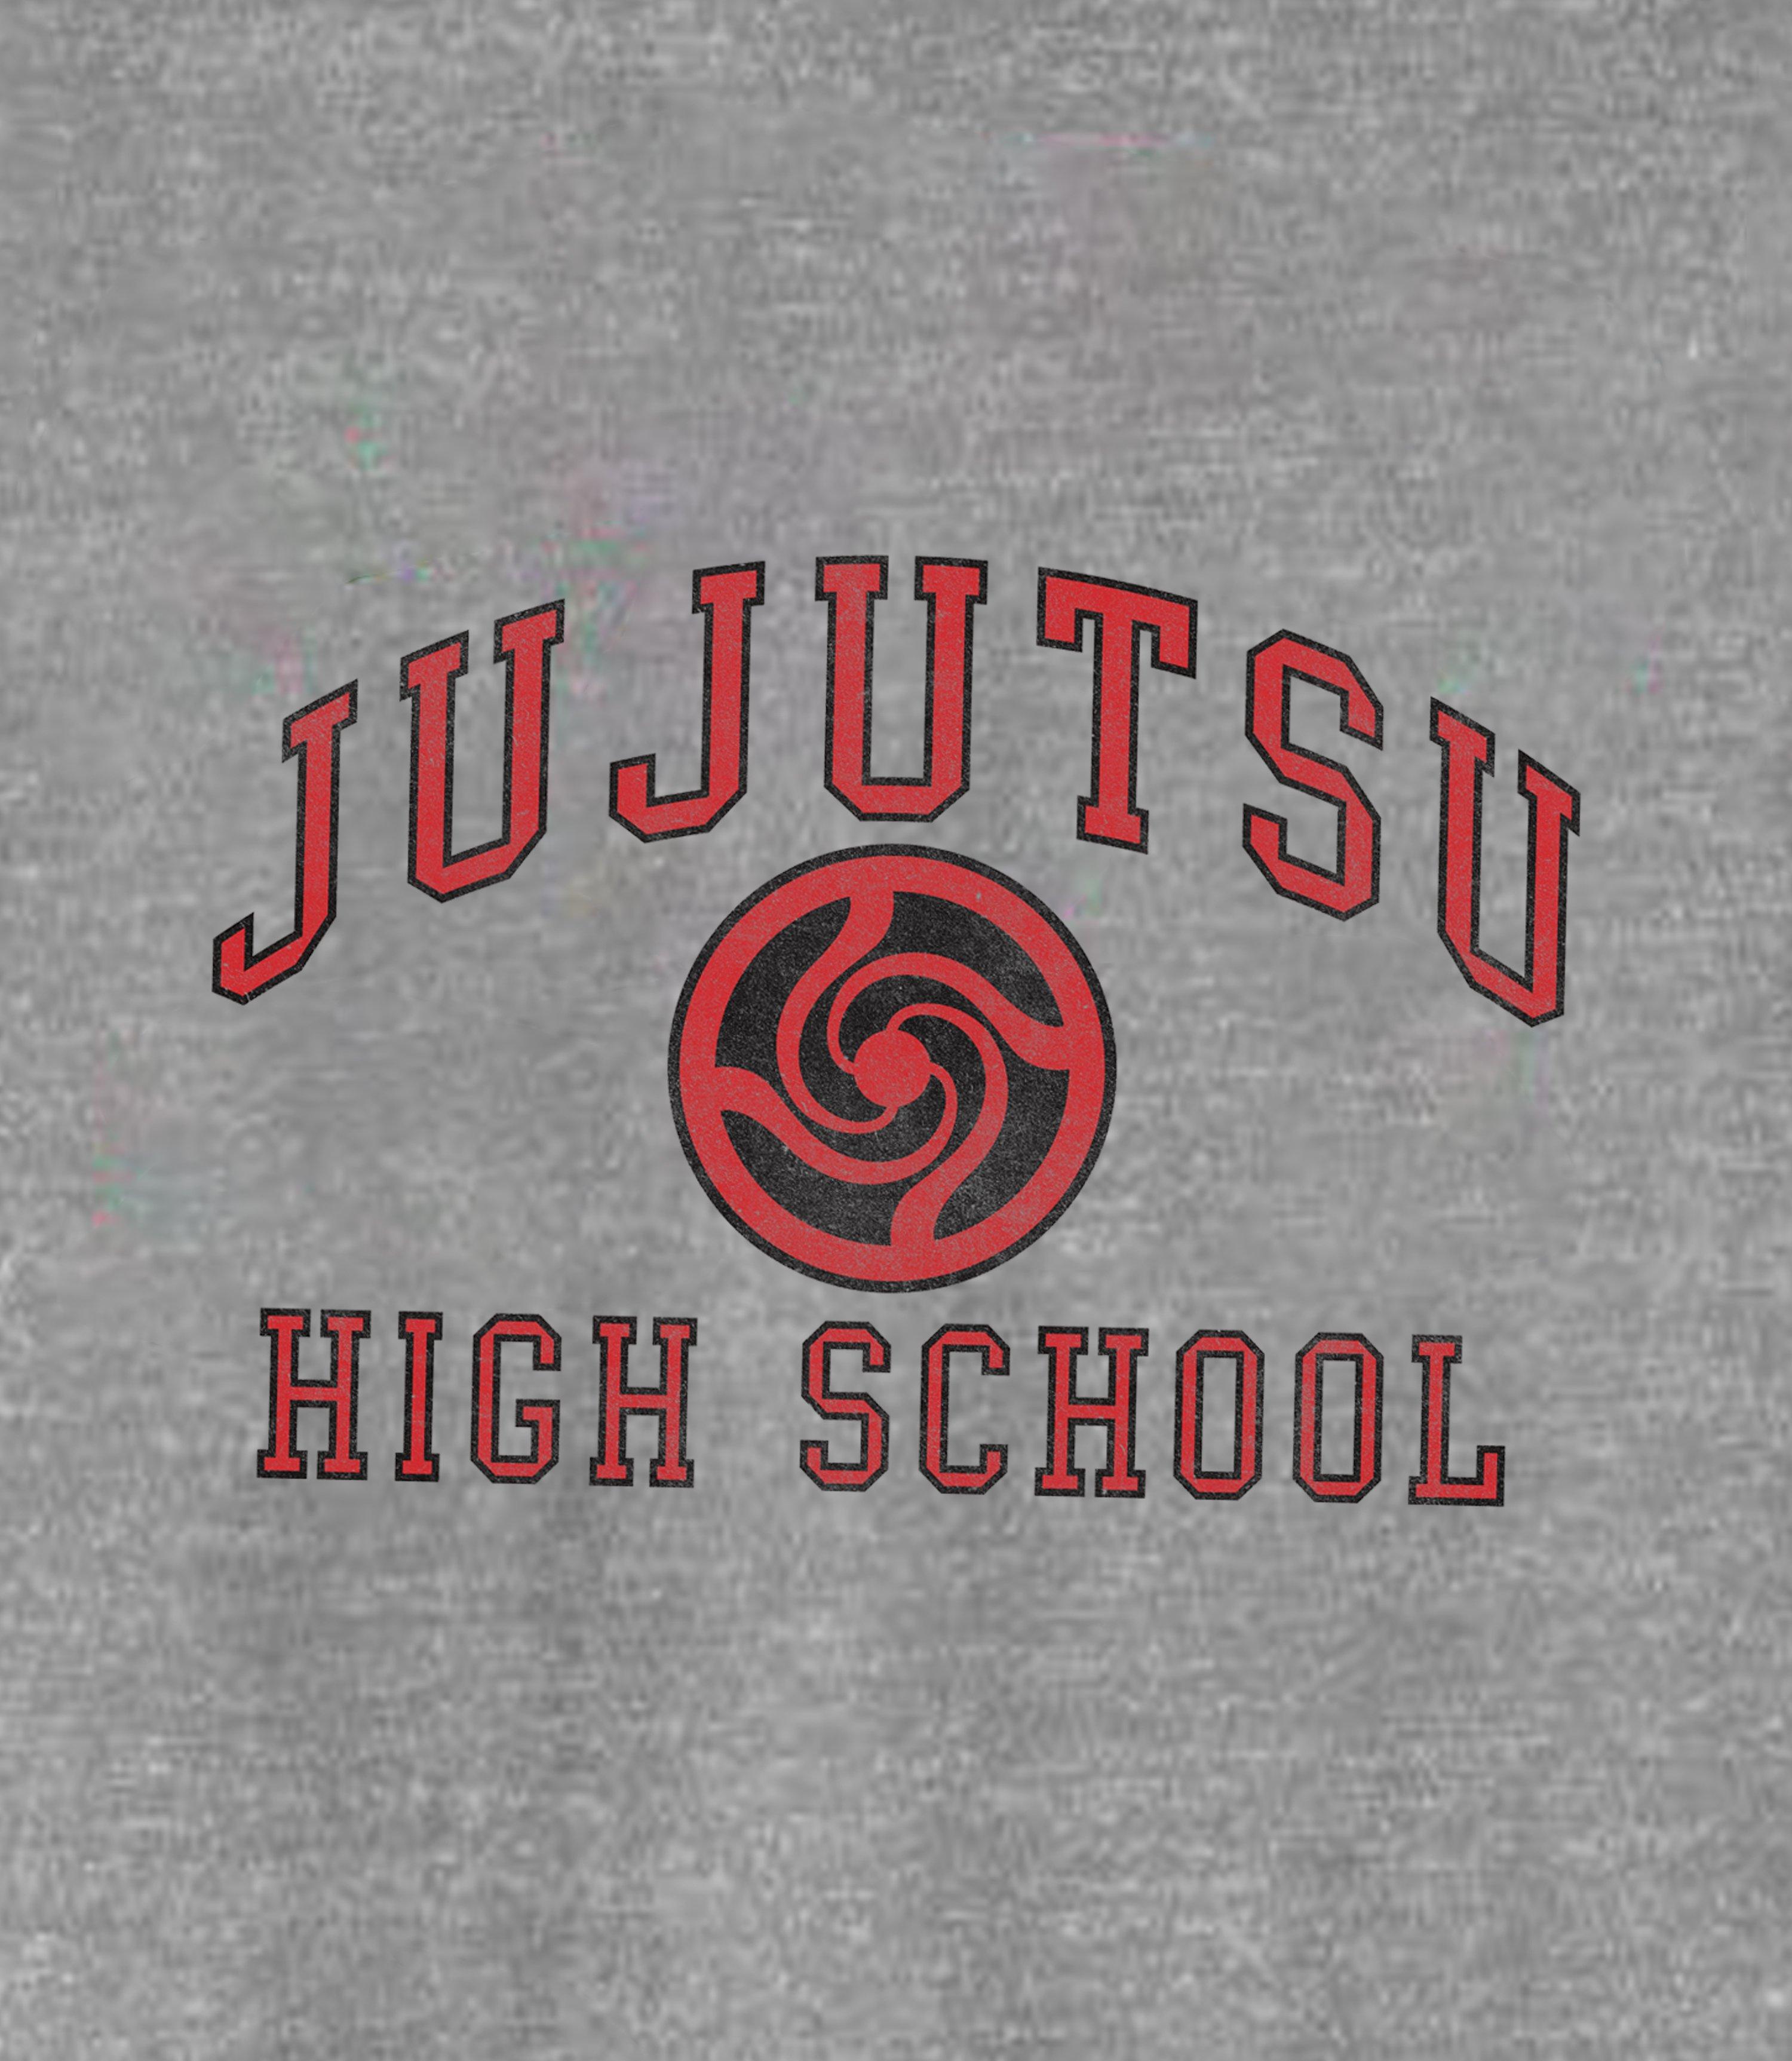 list item 2 of 2 Jujutsu High School Athletic T-Shirt